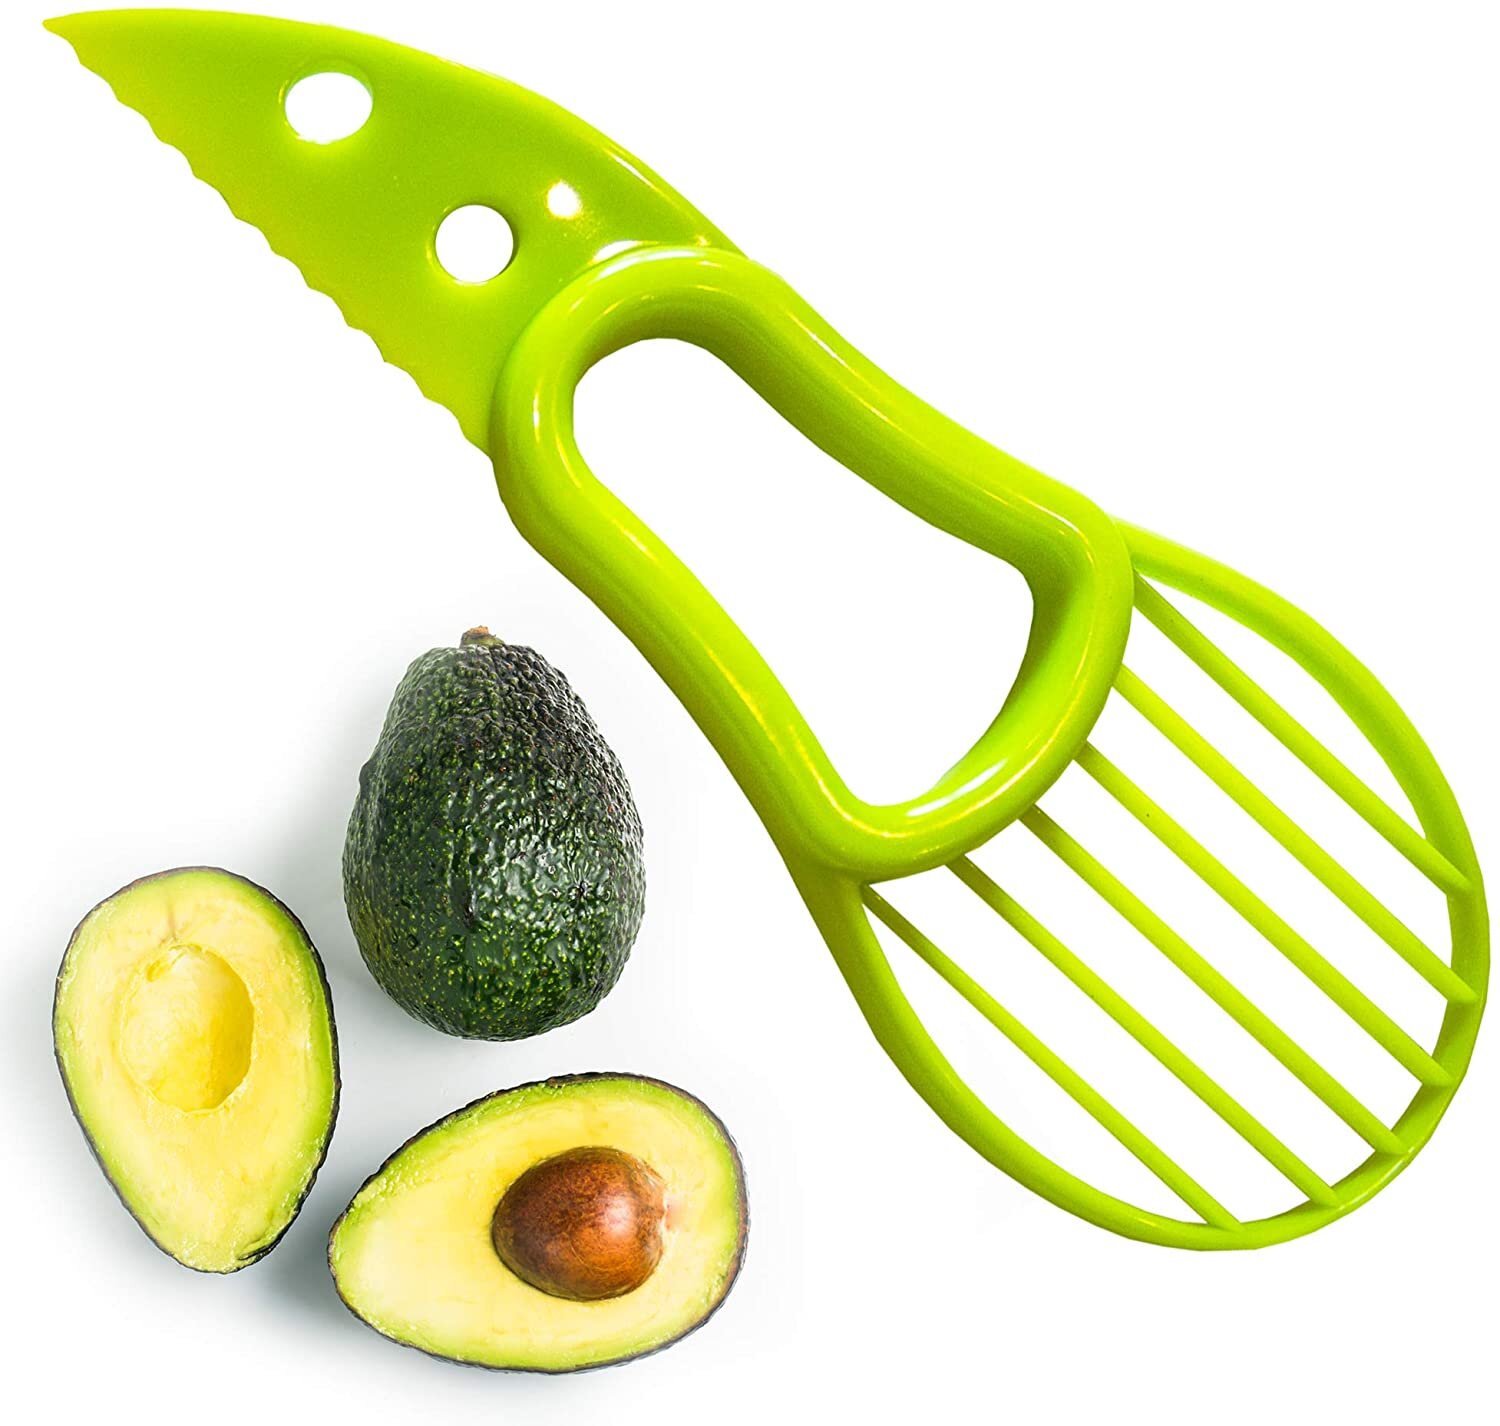 Avocado Slicer 3 in 1, Avocado Tool with Silicon Grip Handle